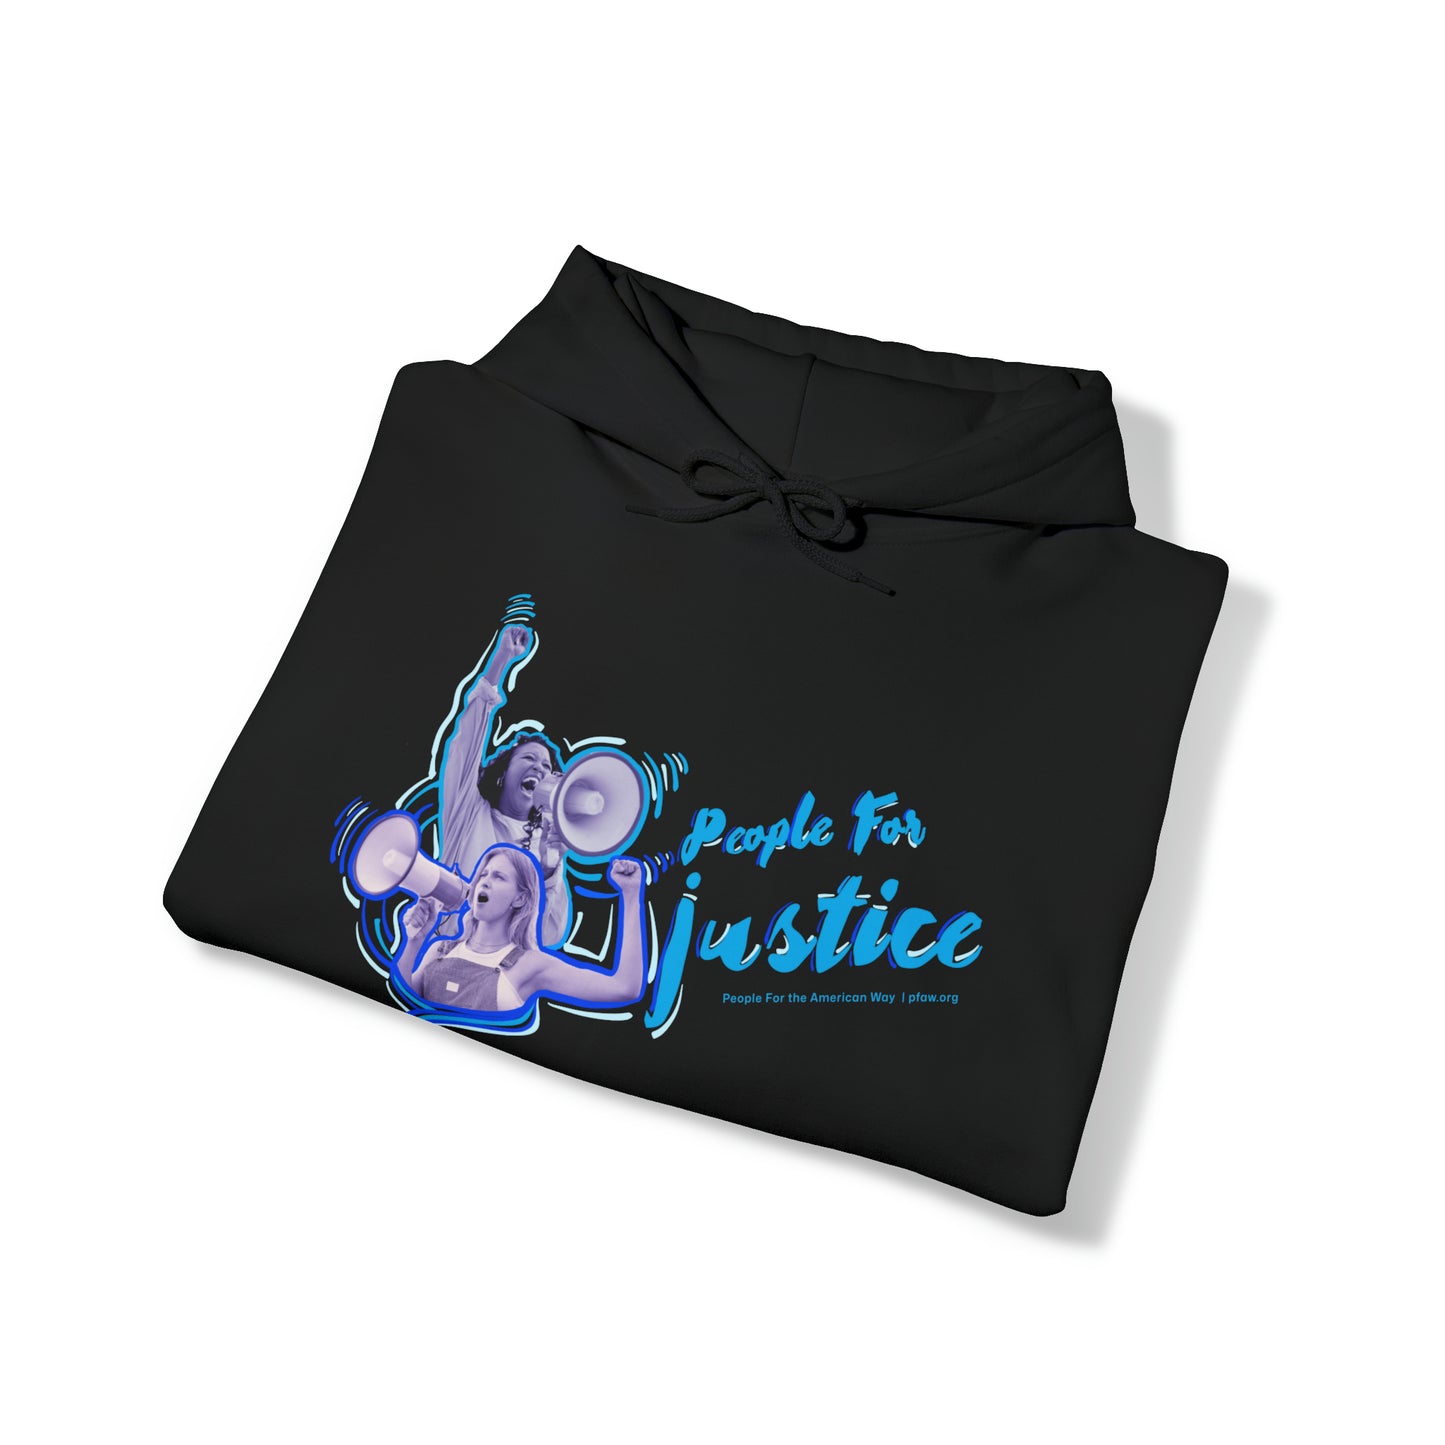 People For Justice Hooded Sweatshirt